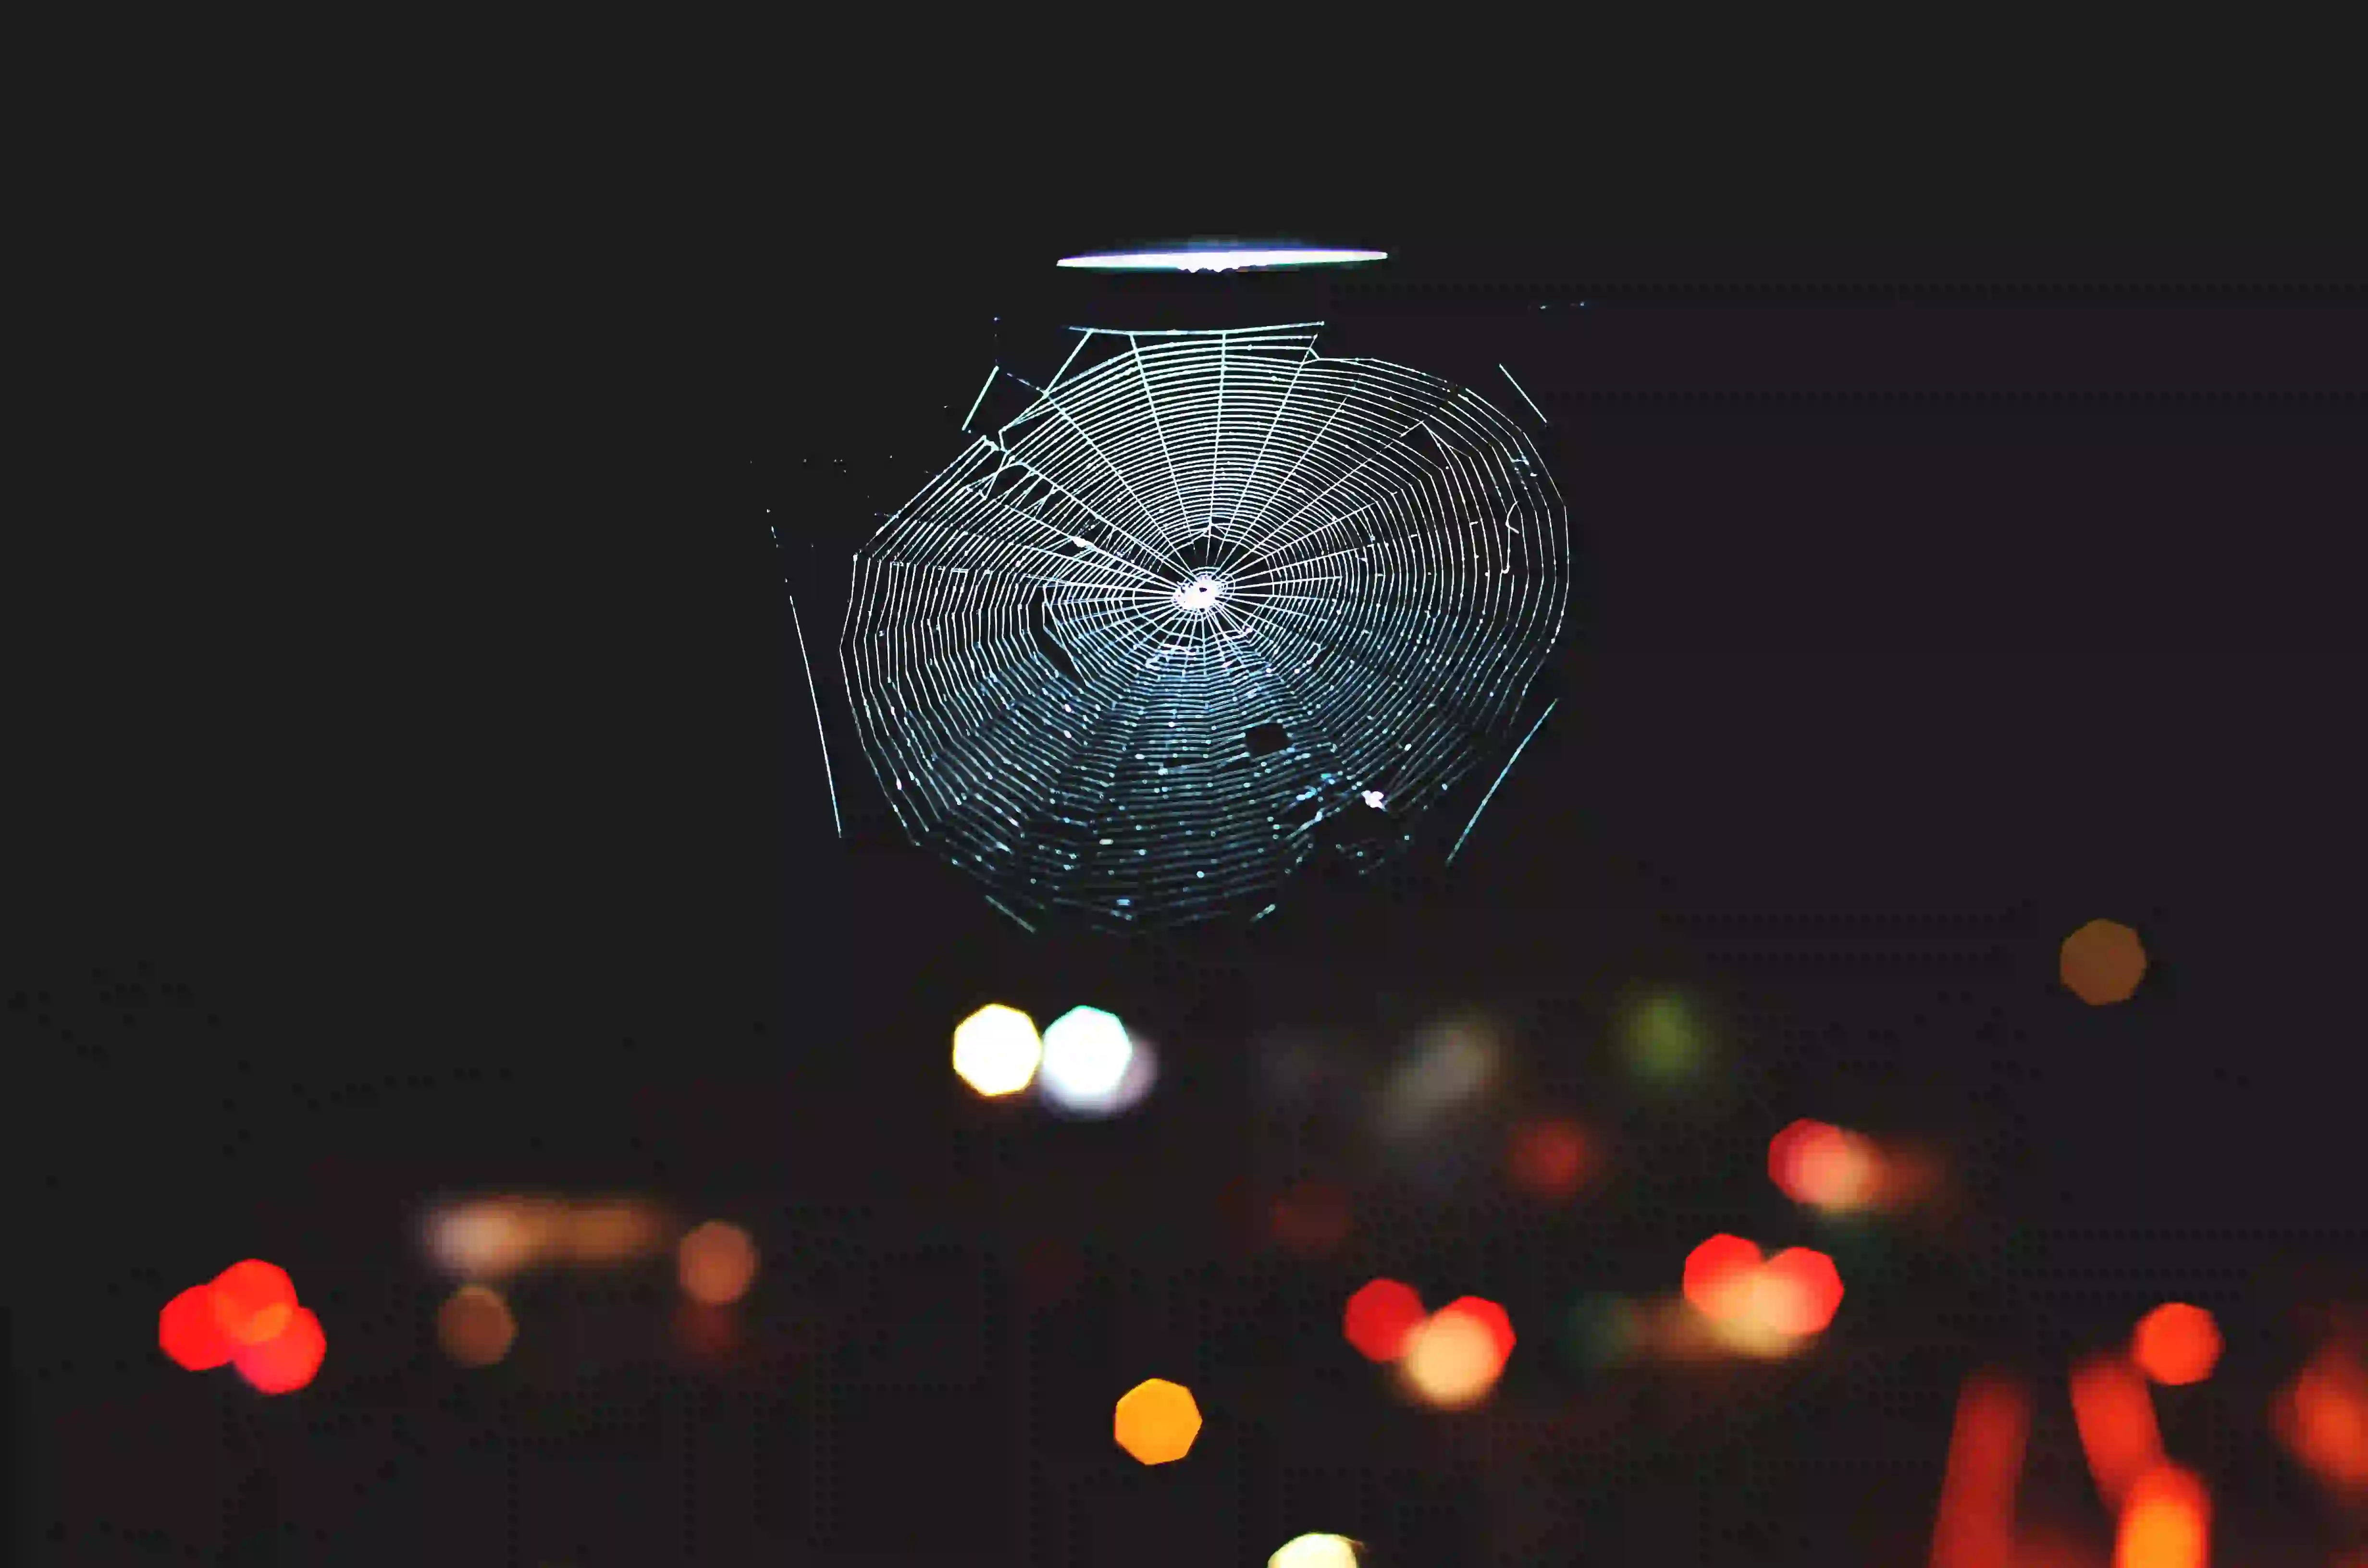 Spider net with black background